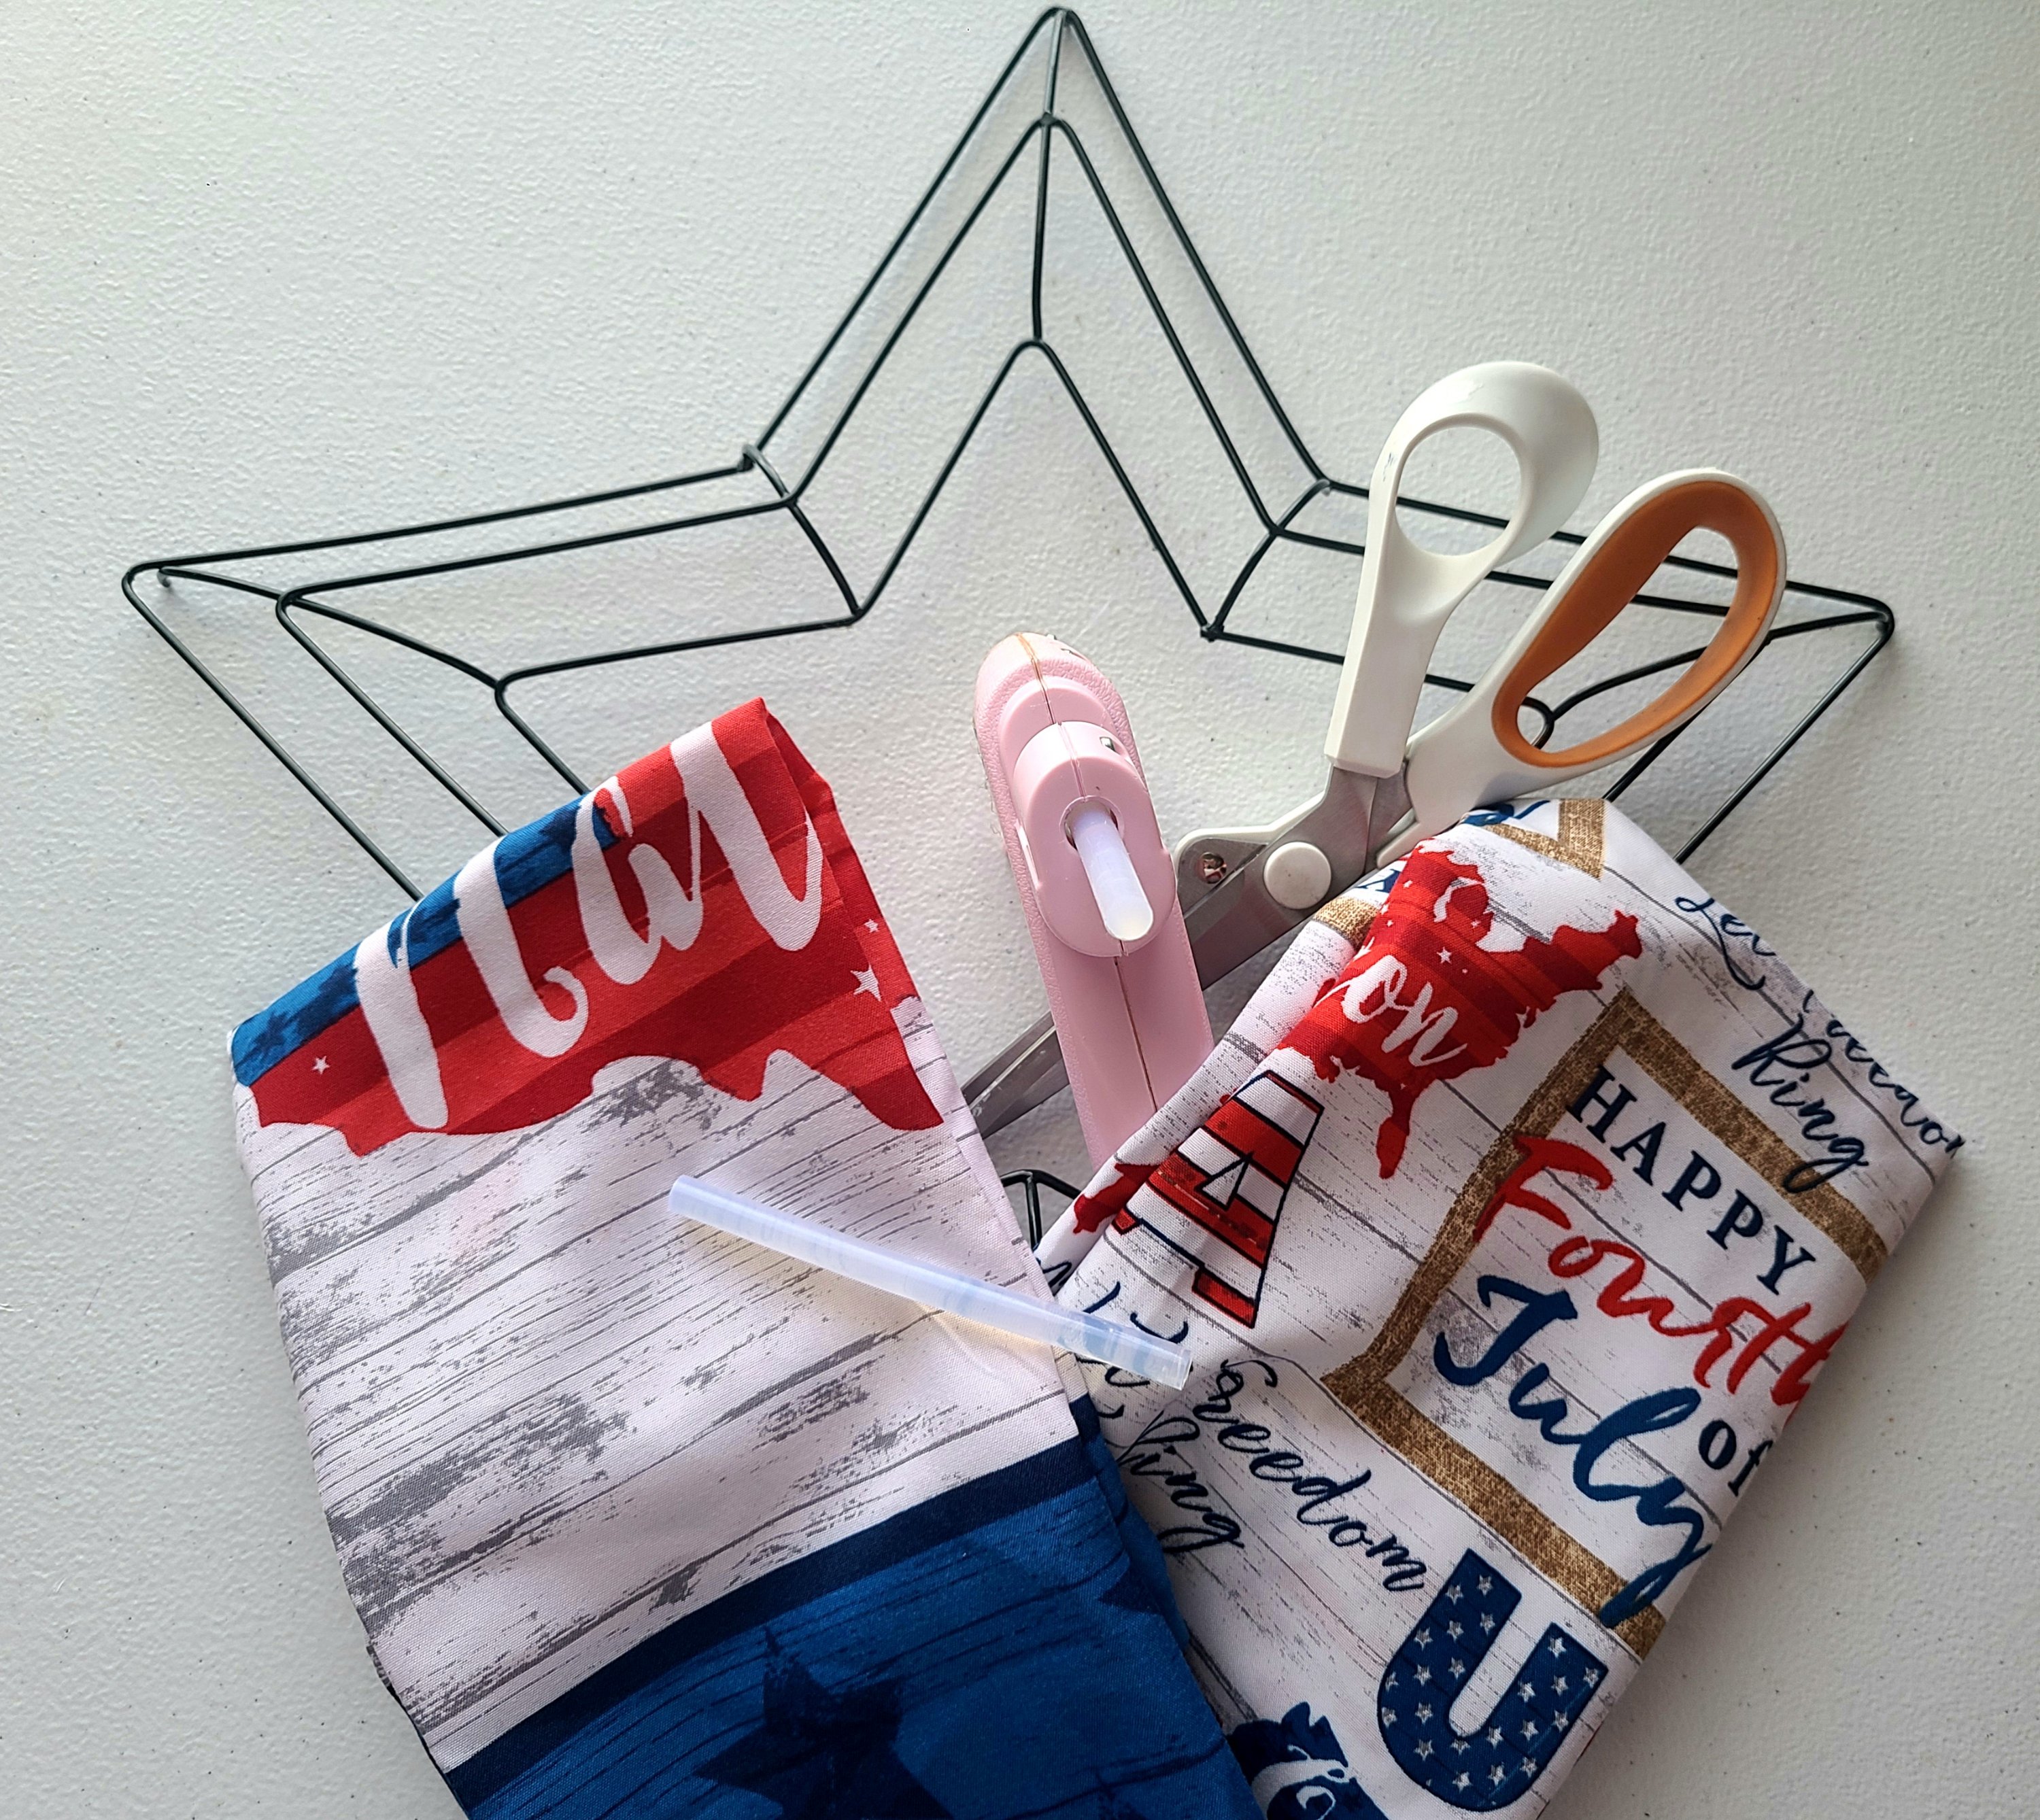 Patriotic star wreath supplies: star wreath form, scissors, hot glue gun & glue, and two bandanas made of patriotic fabric from Dollar Tree